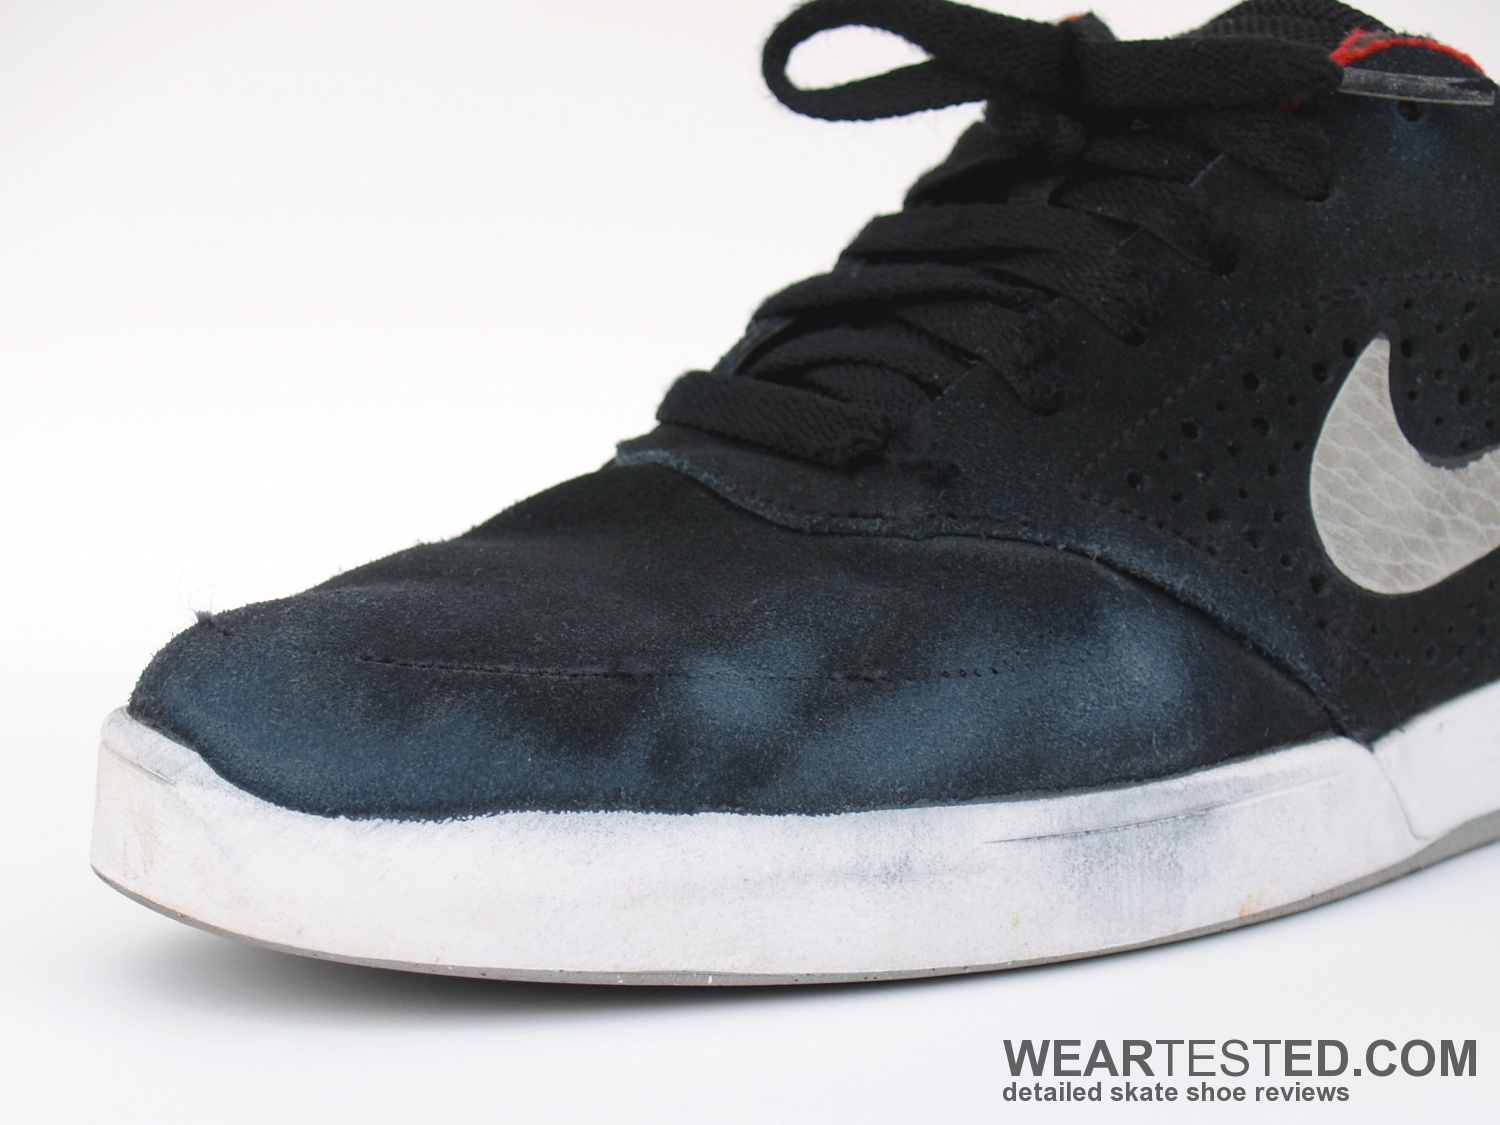 volatilidad Humano Limpiar el piso Nike Paul Rodriguez 6 review - Weartested - detailed skate shoe reviews